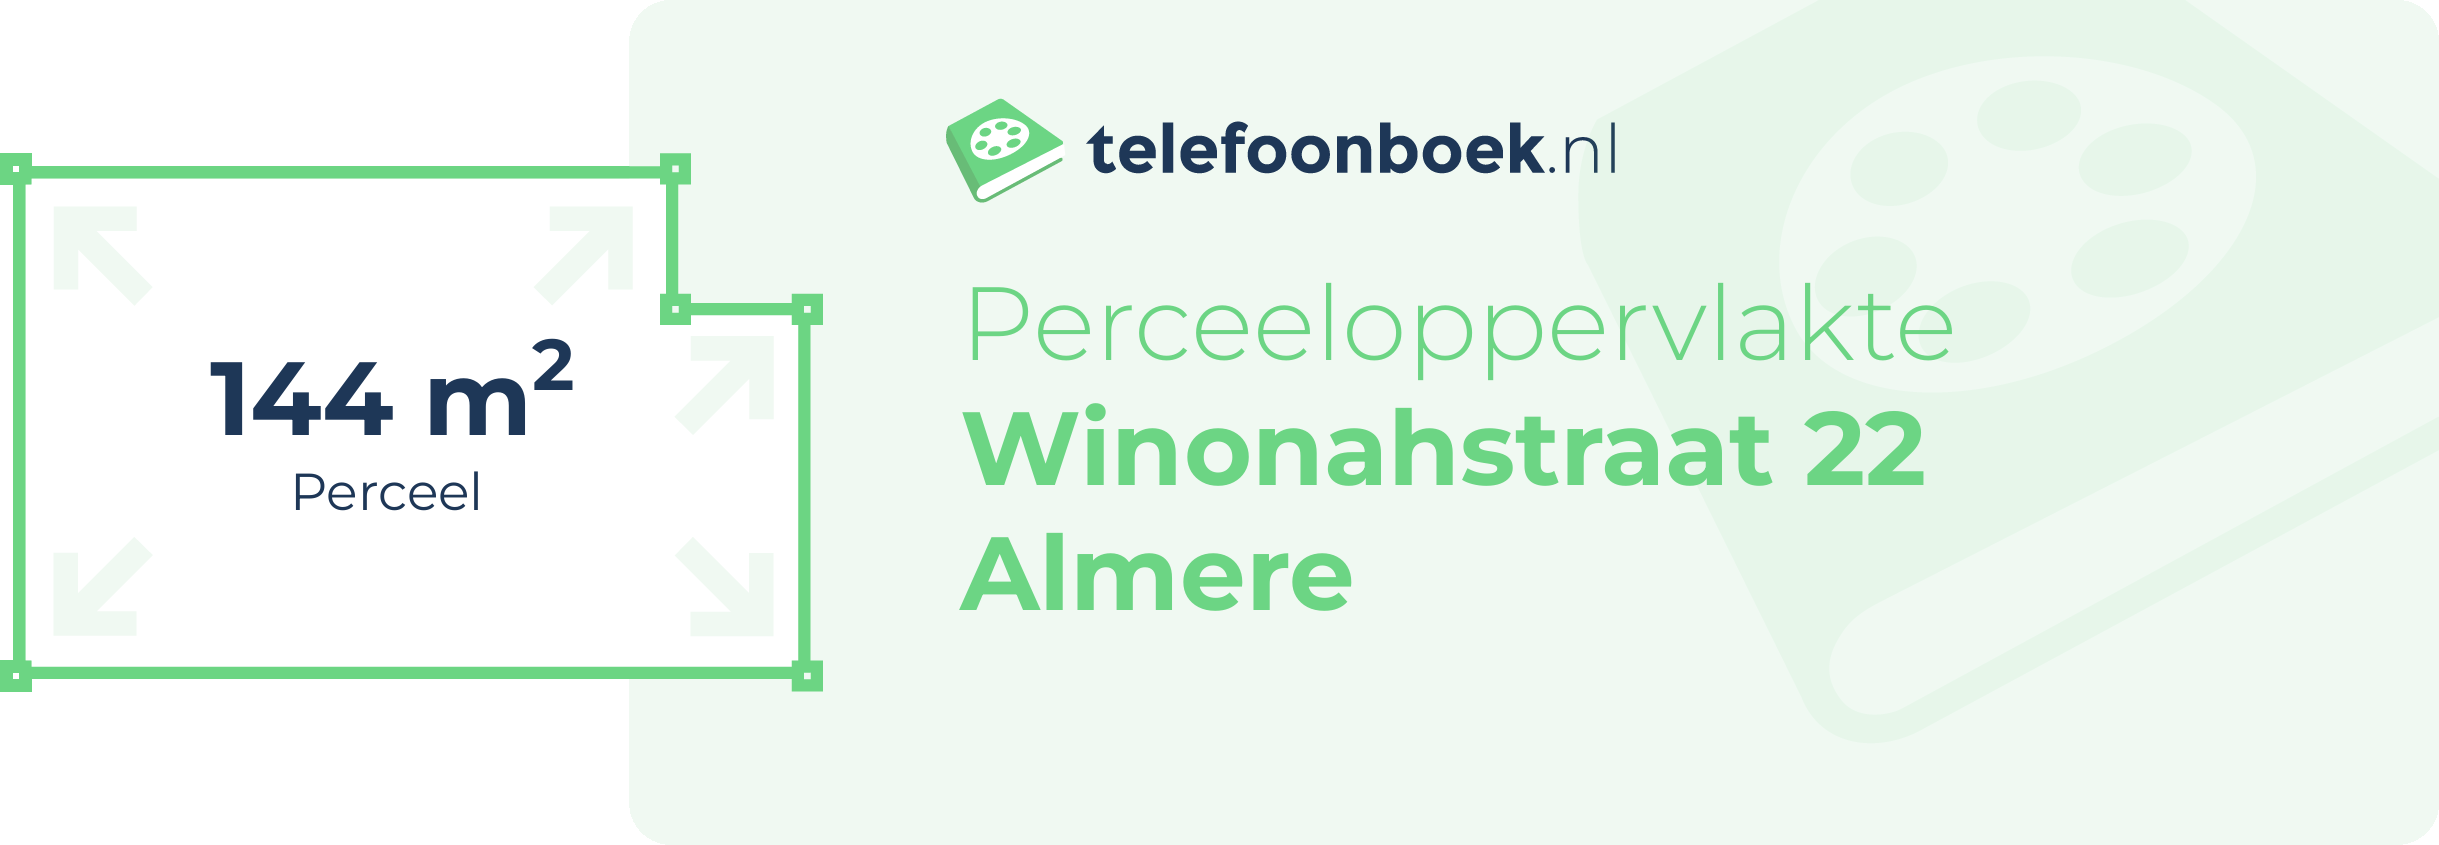 Perceeloppervlakte Winonahstraat 22 Almere